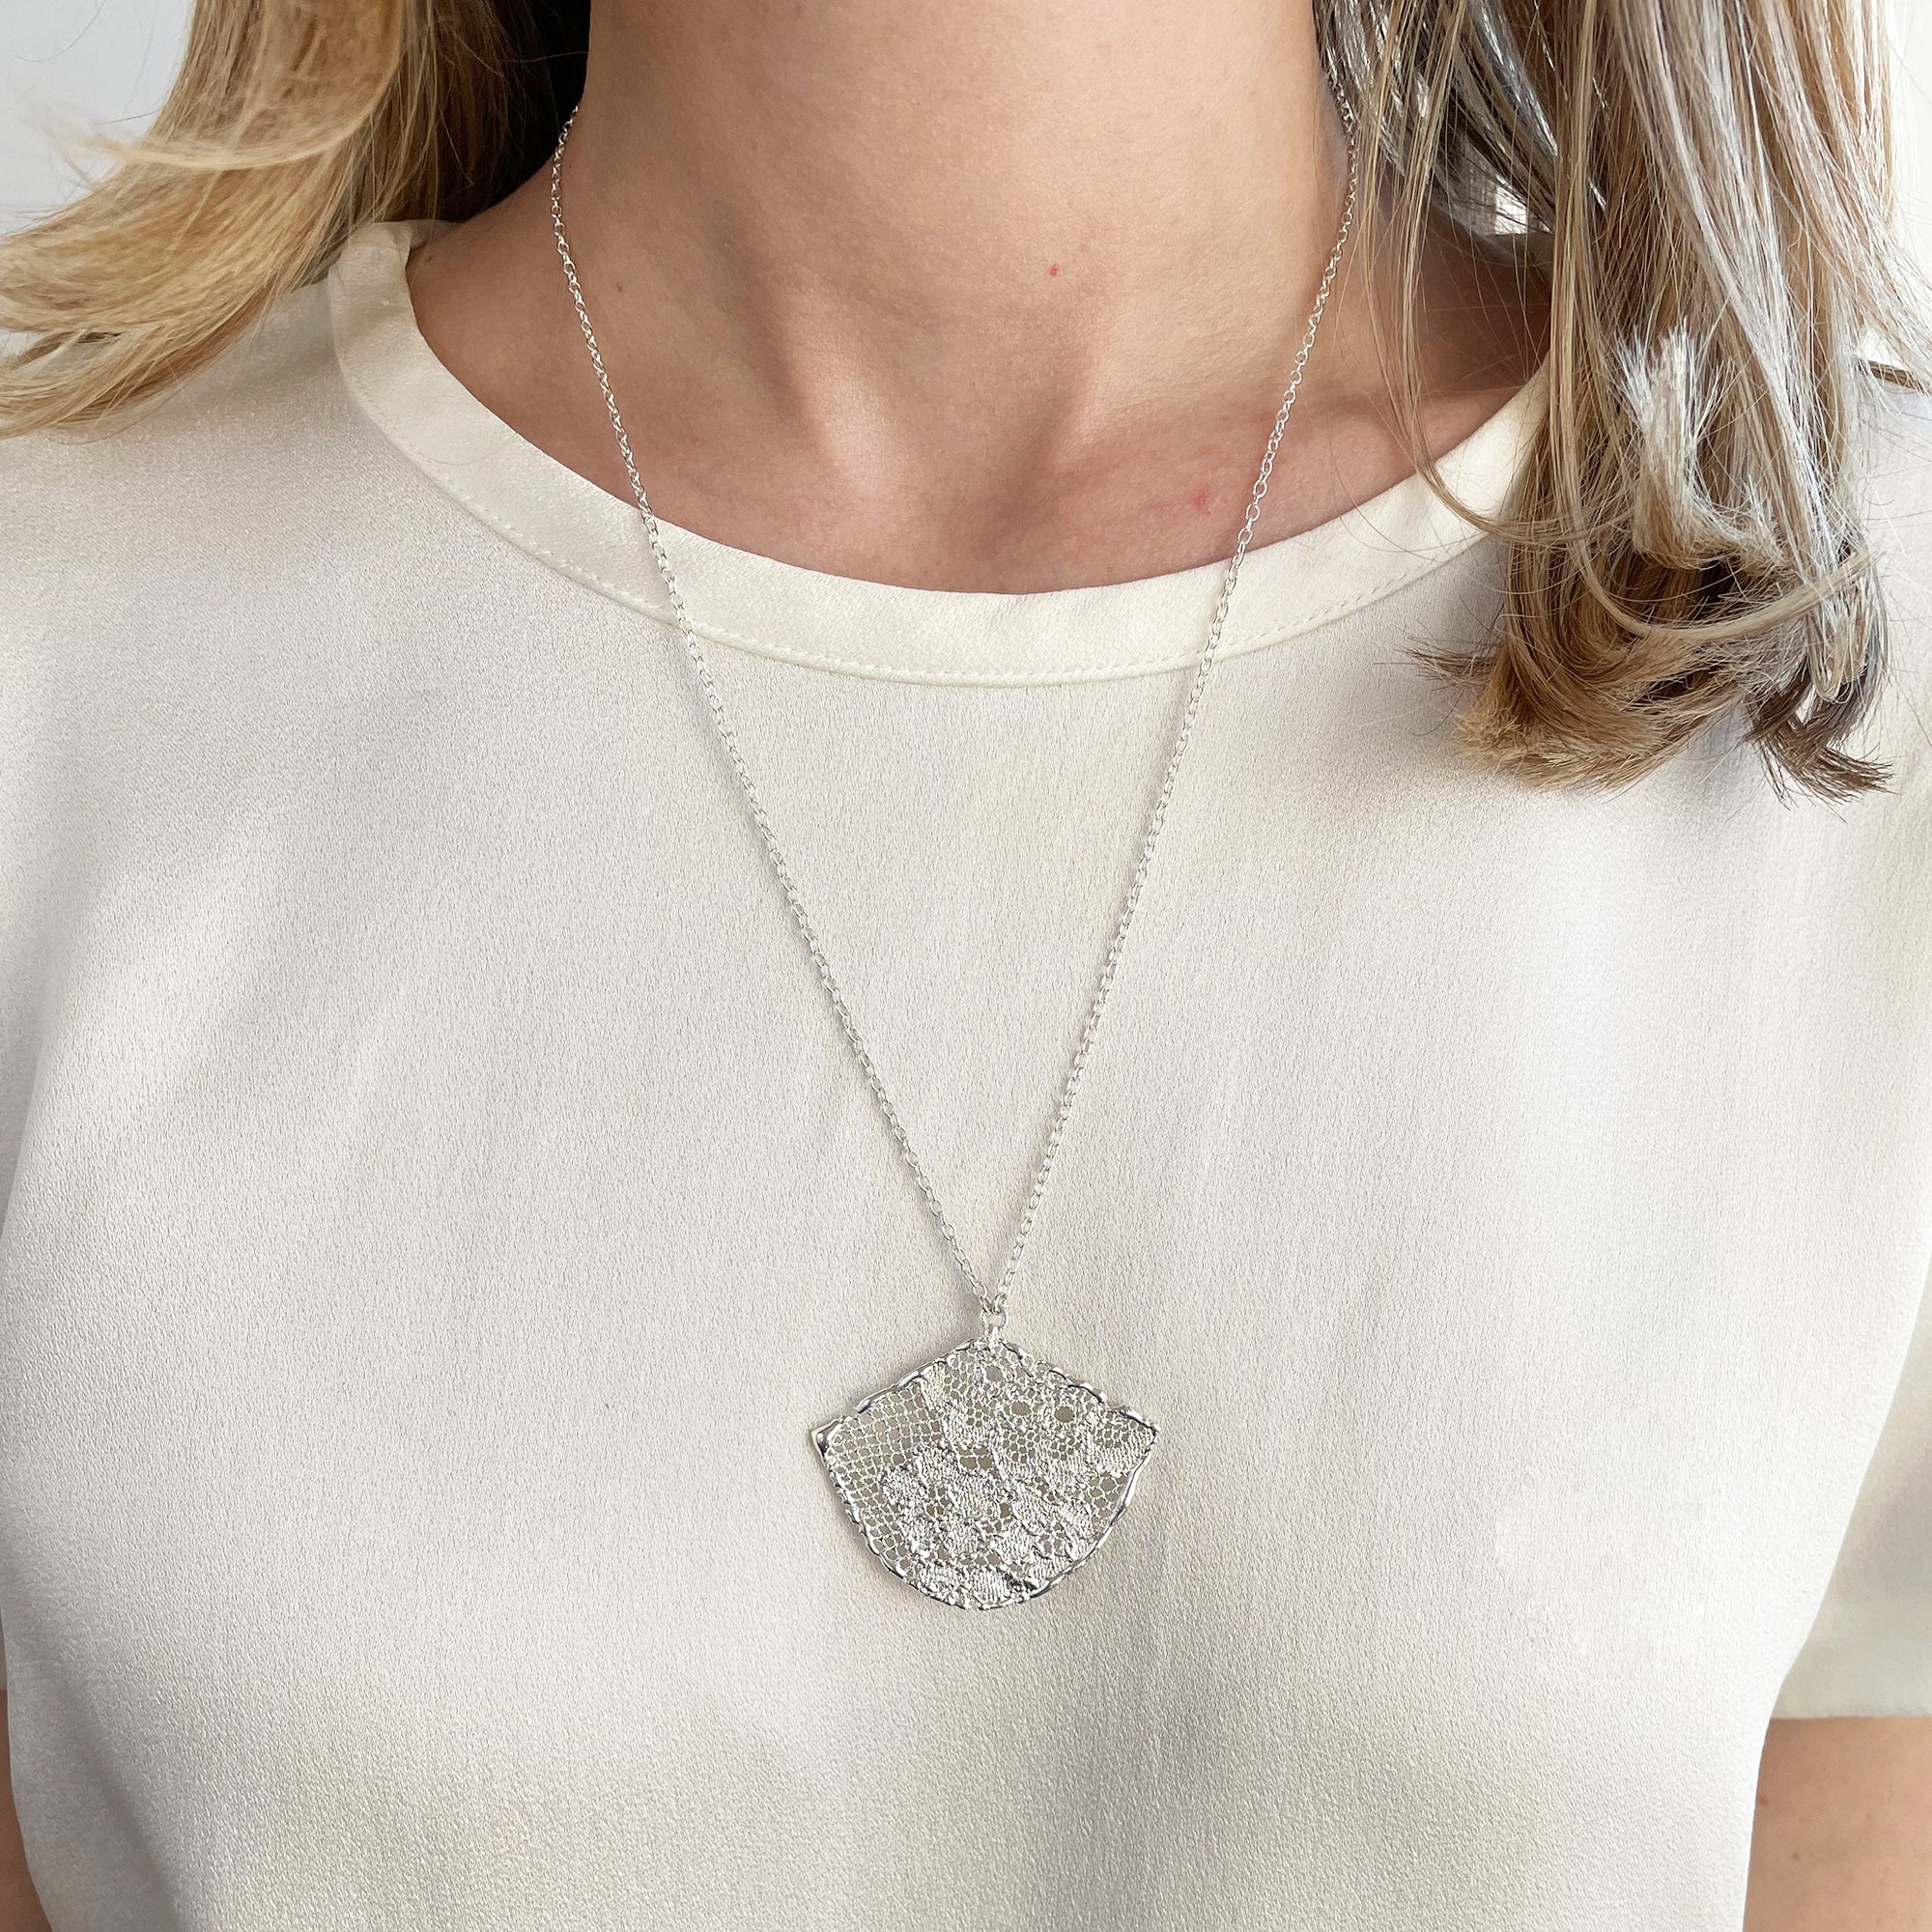 Fan shaped lace necklace in sterling silver.